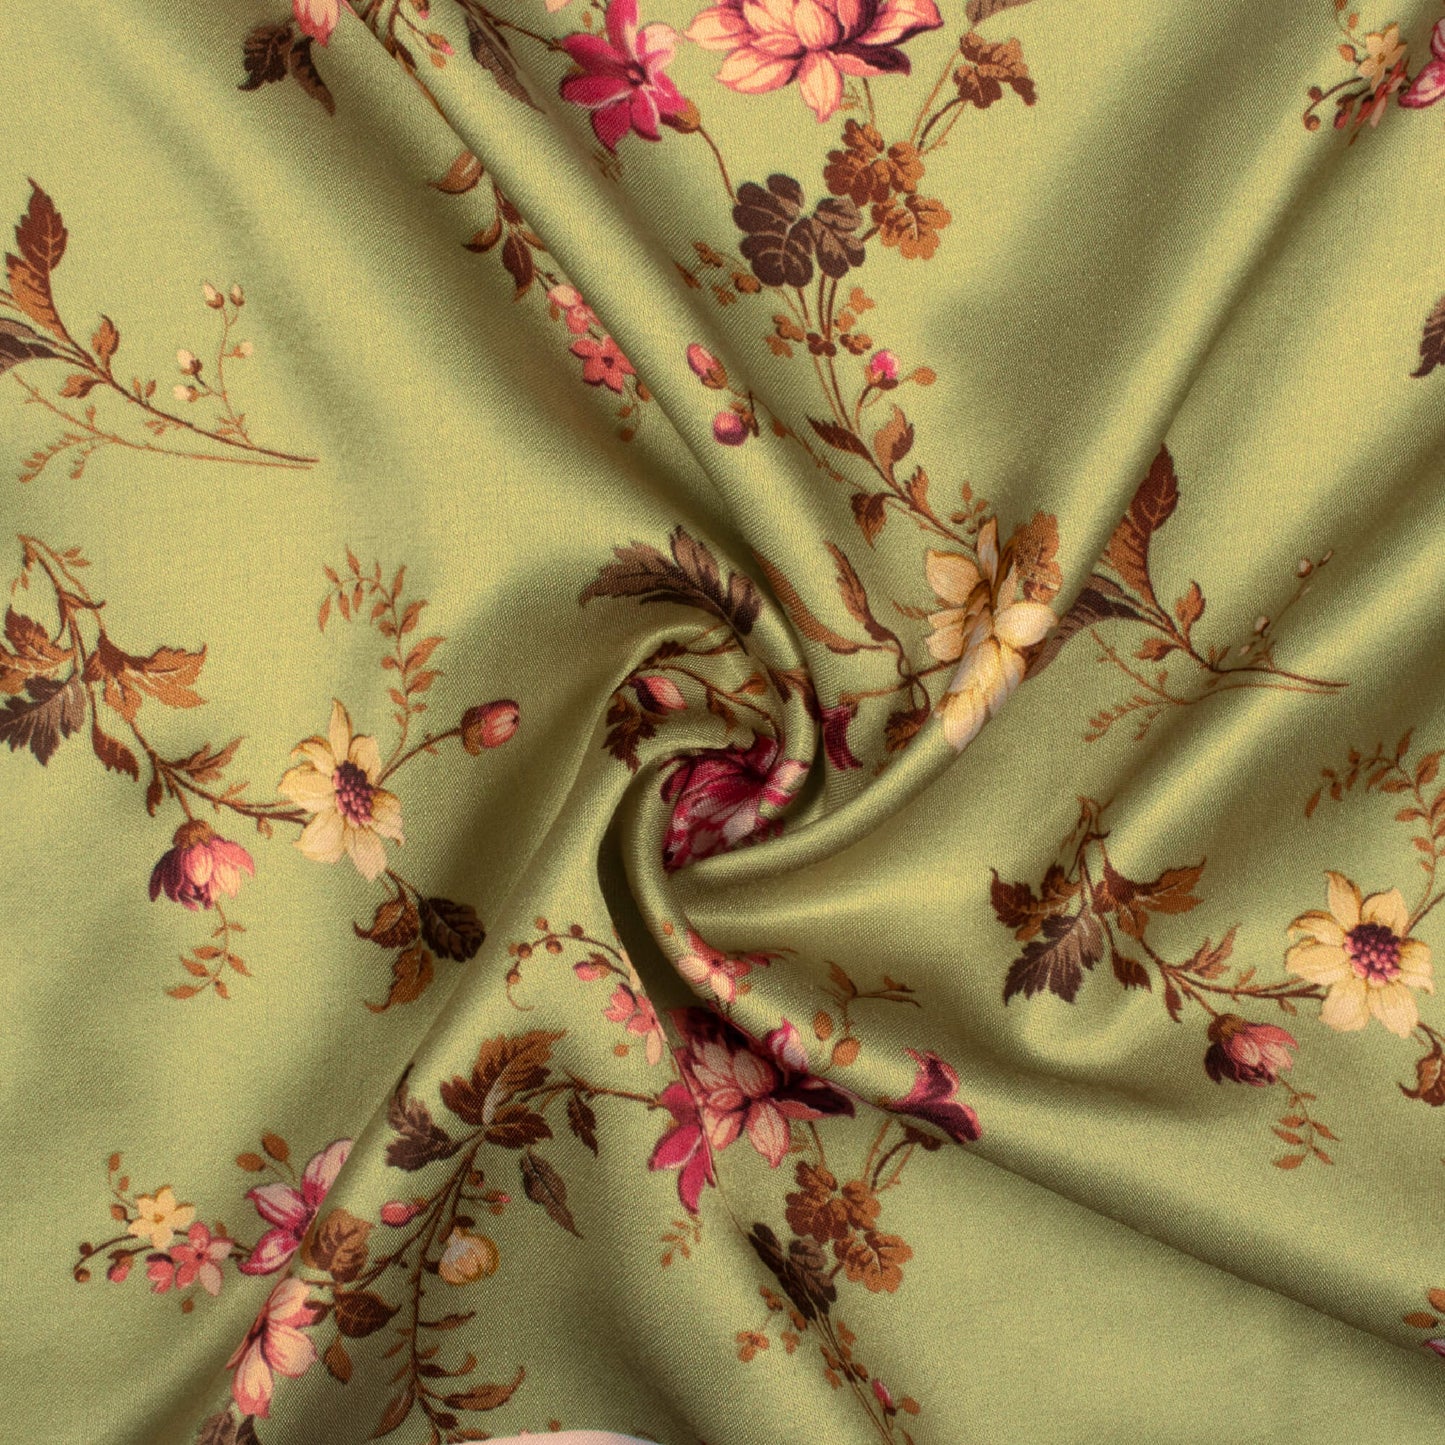 Moss Green And Pink Floral Pattern Digital Print Premium Lush Satin Fabric